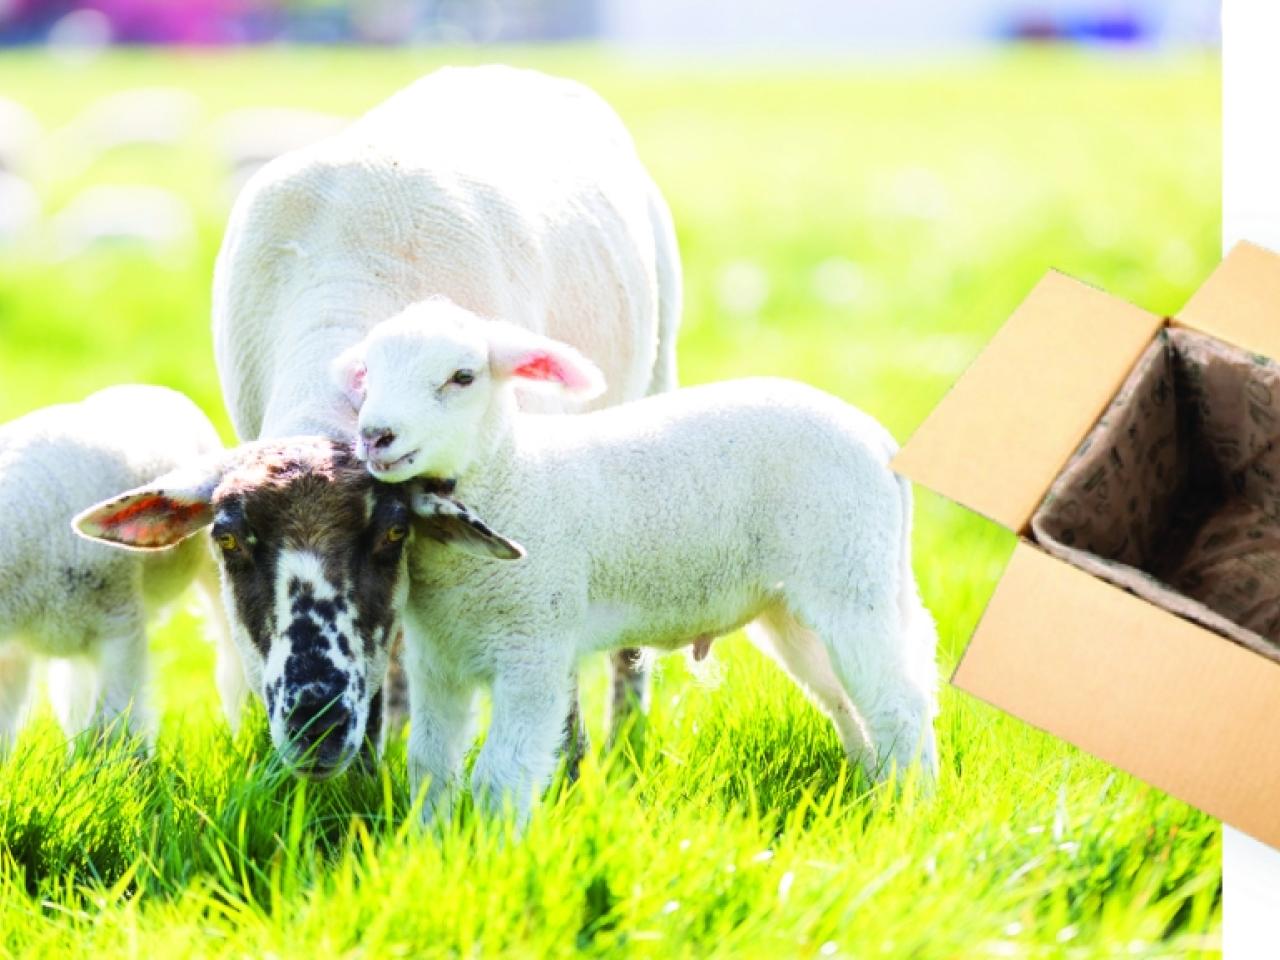 split image of sheep in field and cardboard box